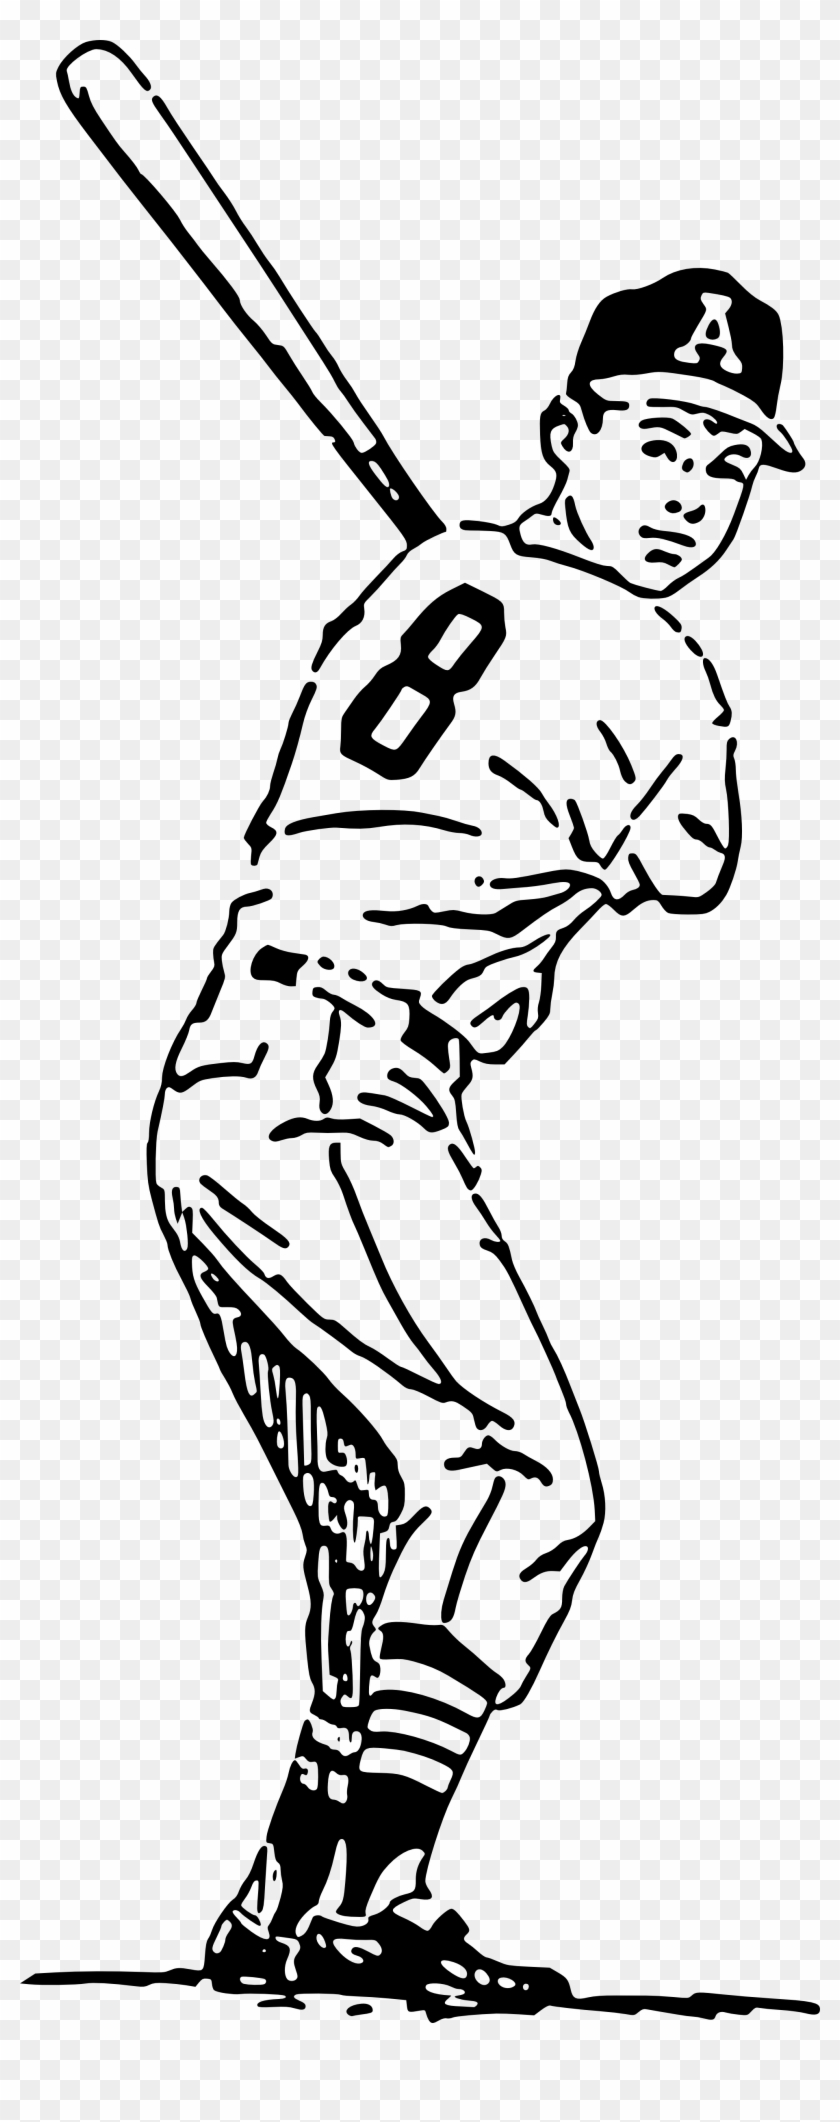 Baseball Black And White Baseball Clipart Images Black - Clipart Baseball Player - Png Download #65026